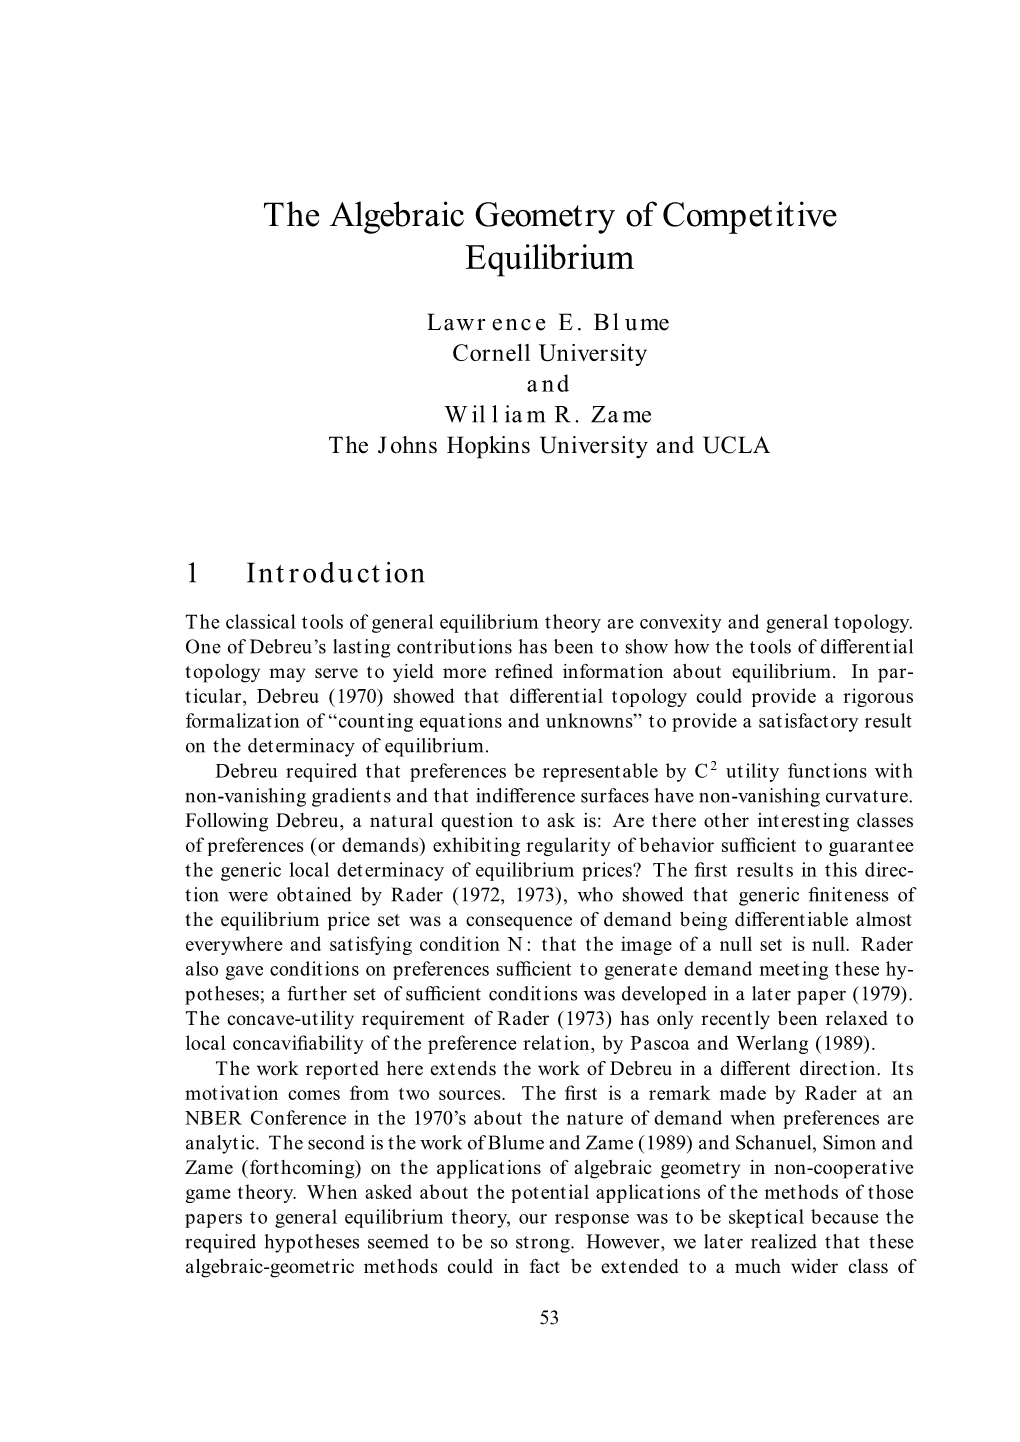 The Algebraic Geometry of Competitive Equilibrium